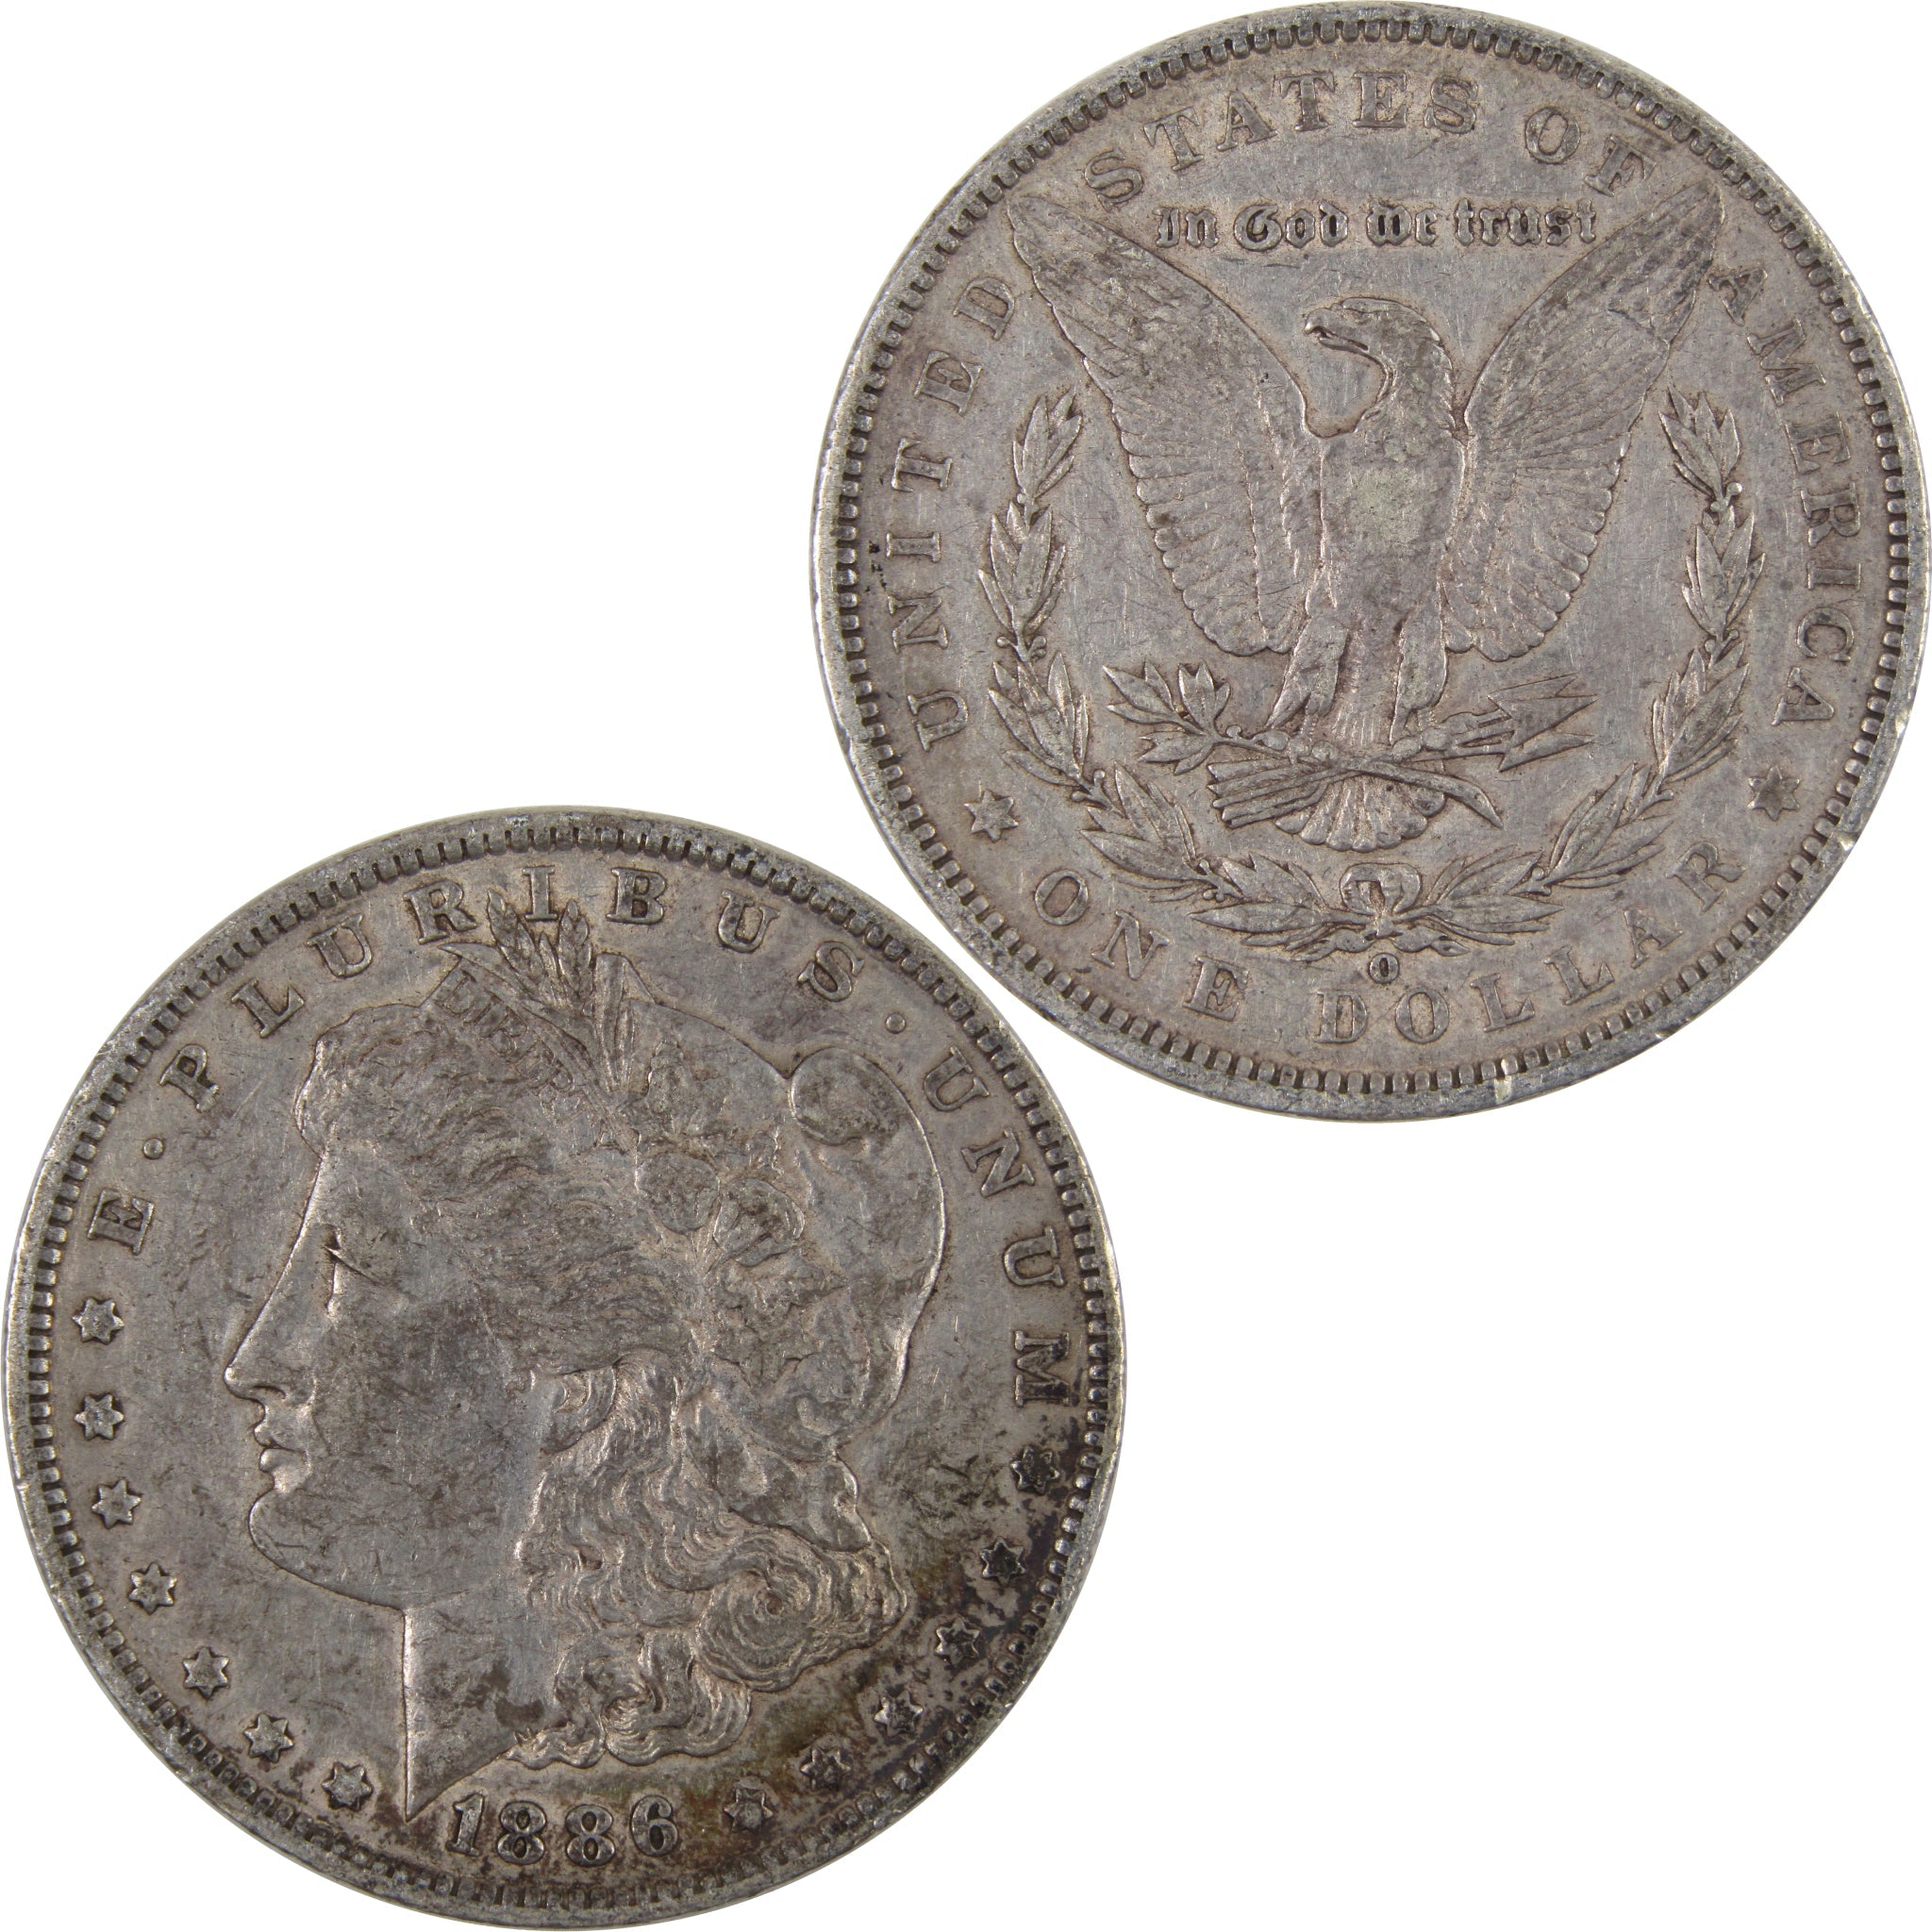 1886 O Morgan Dollar VF Very Fine 90% Silver US Coin SKU:I2417 - Morgan coin - Morgan silver dollar - Morgan silver dollar for sale - Profile Coins &amp; Collectibles